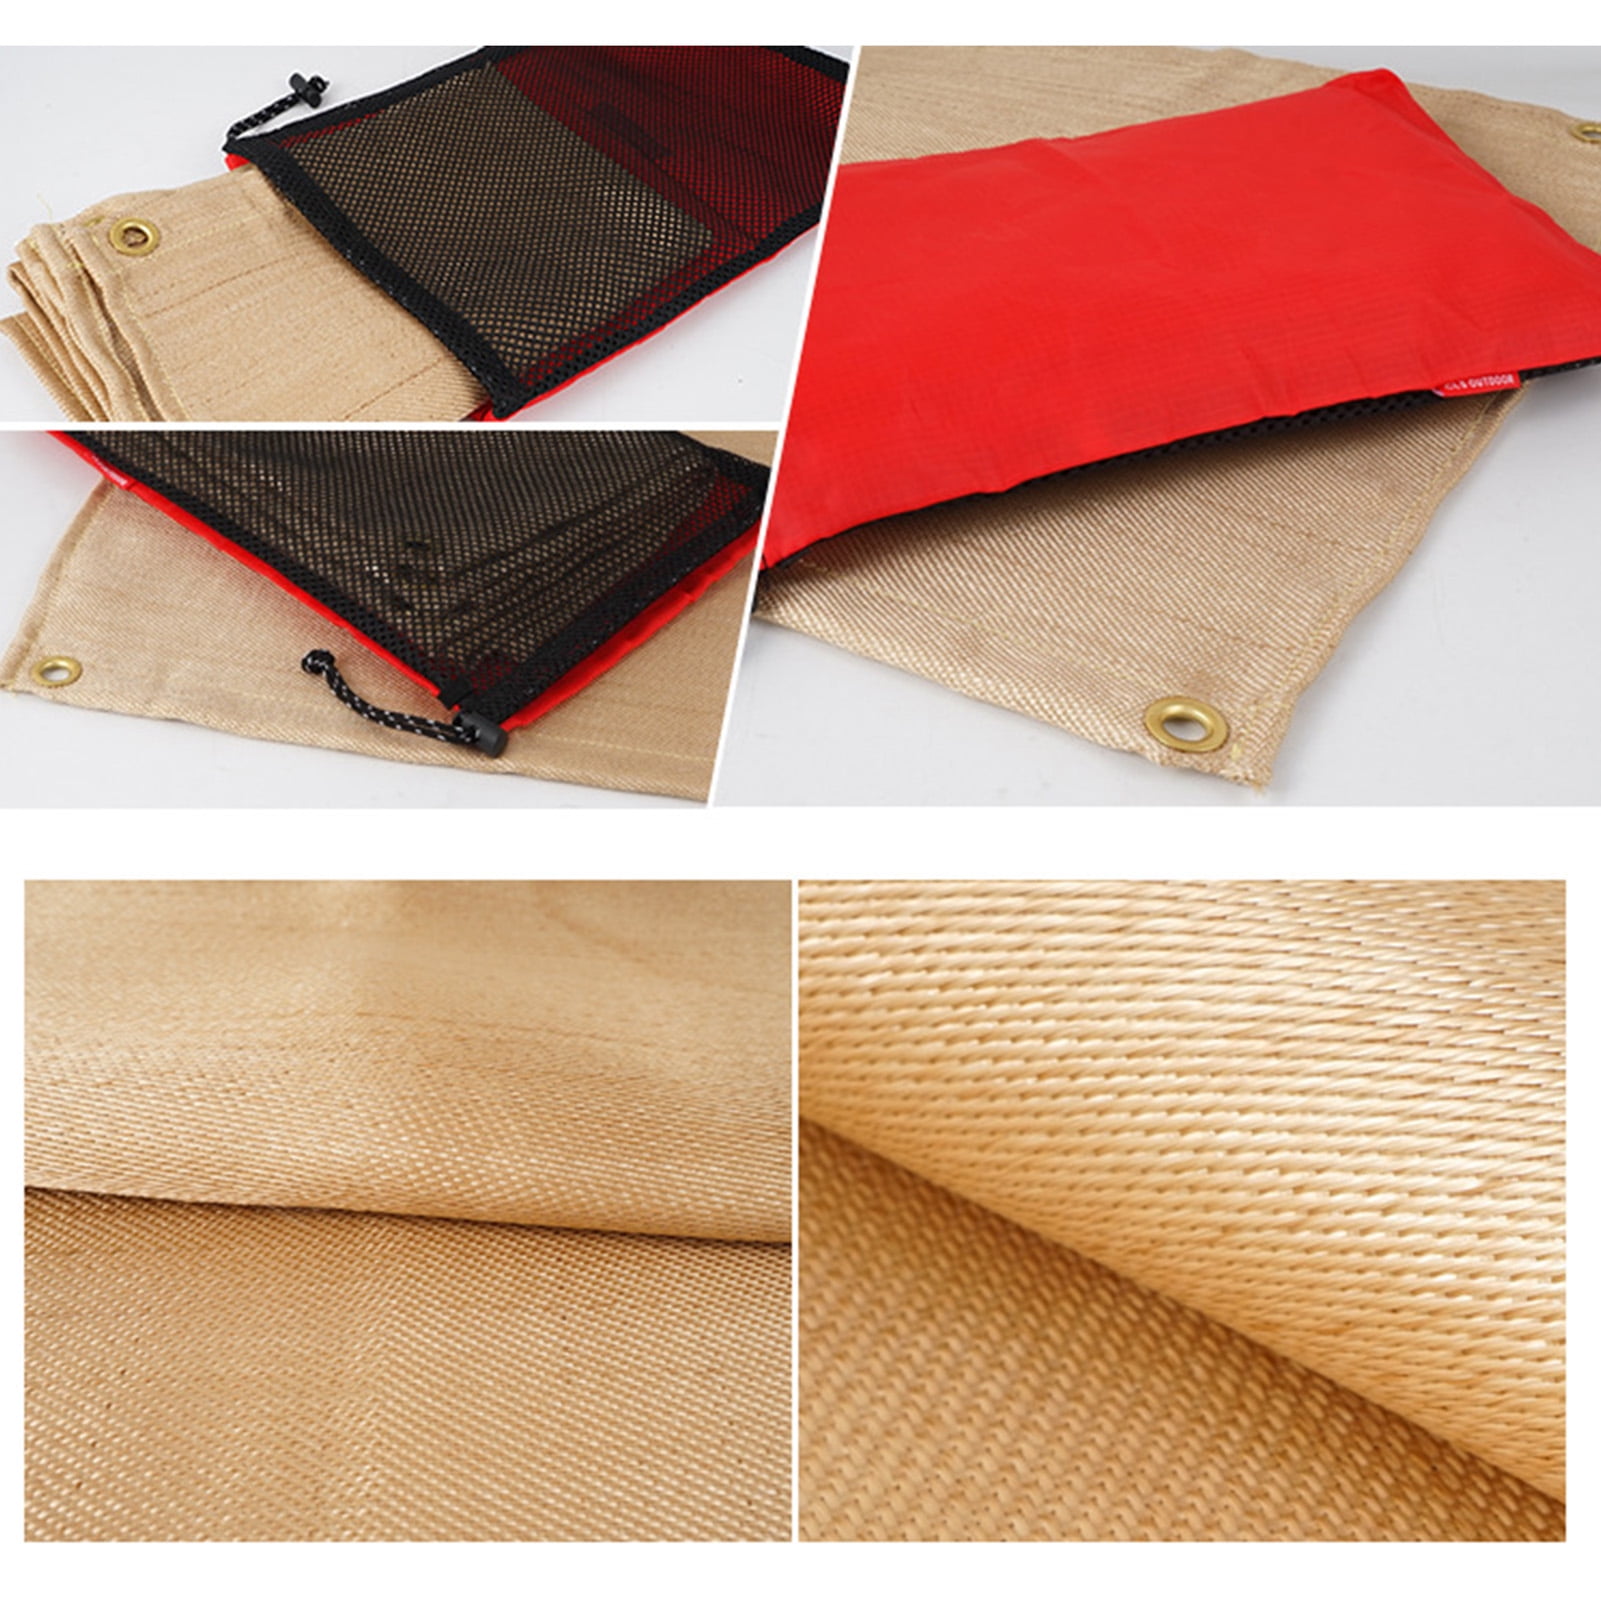  Large Fiberglass Welding Blanket—Retardant